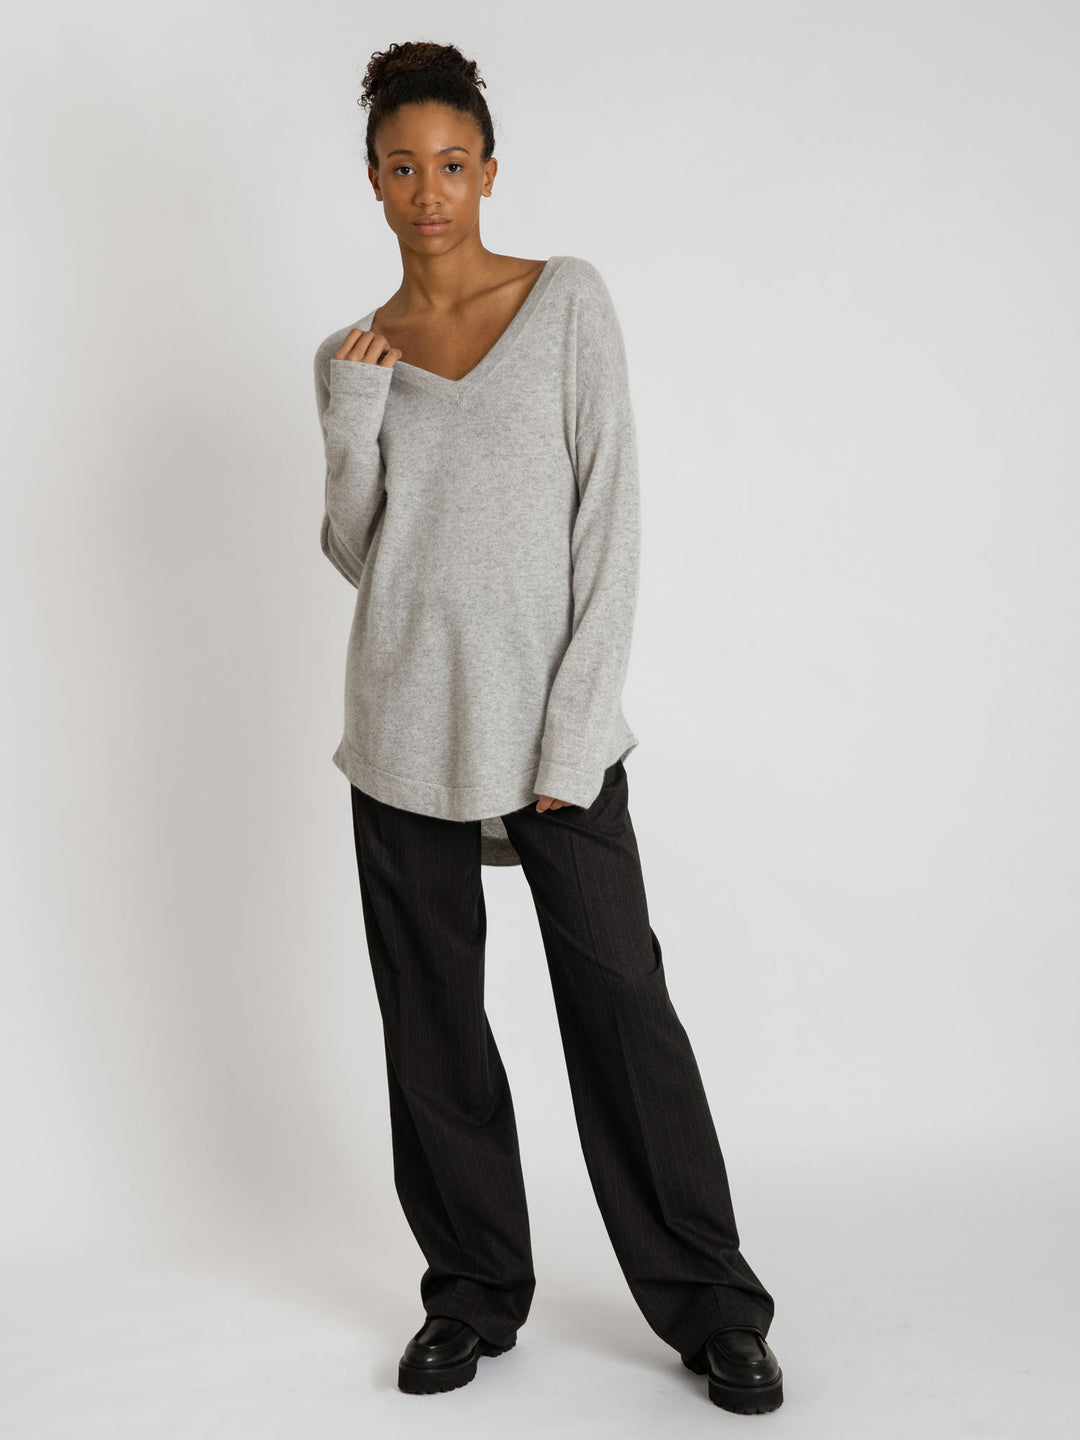 cashmere sweater v-neck from Kashmina 100% pure cashmere, light grey